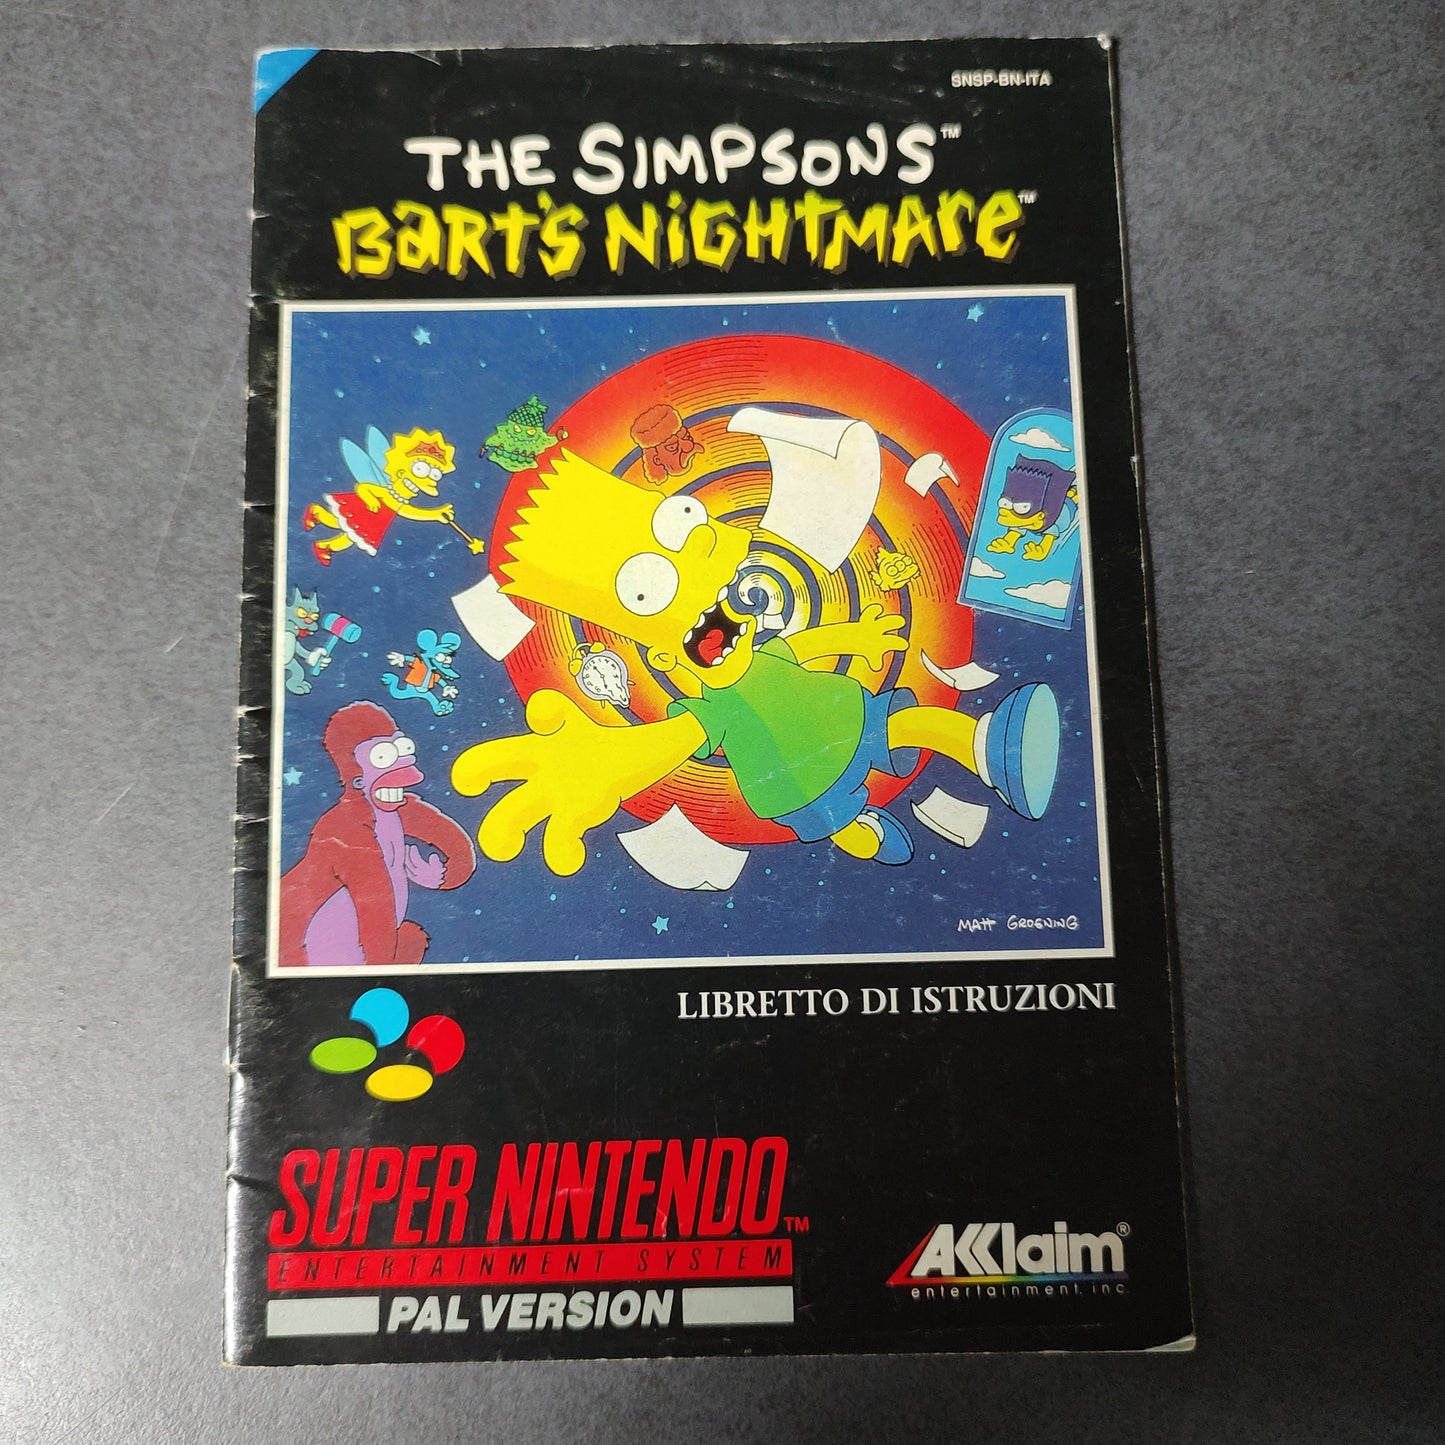 The Simpson's Bart's Nightmare